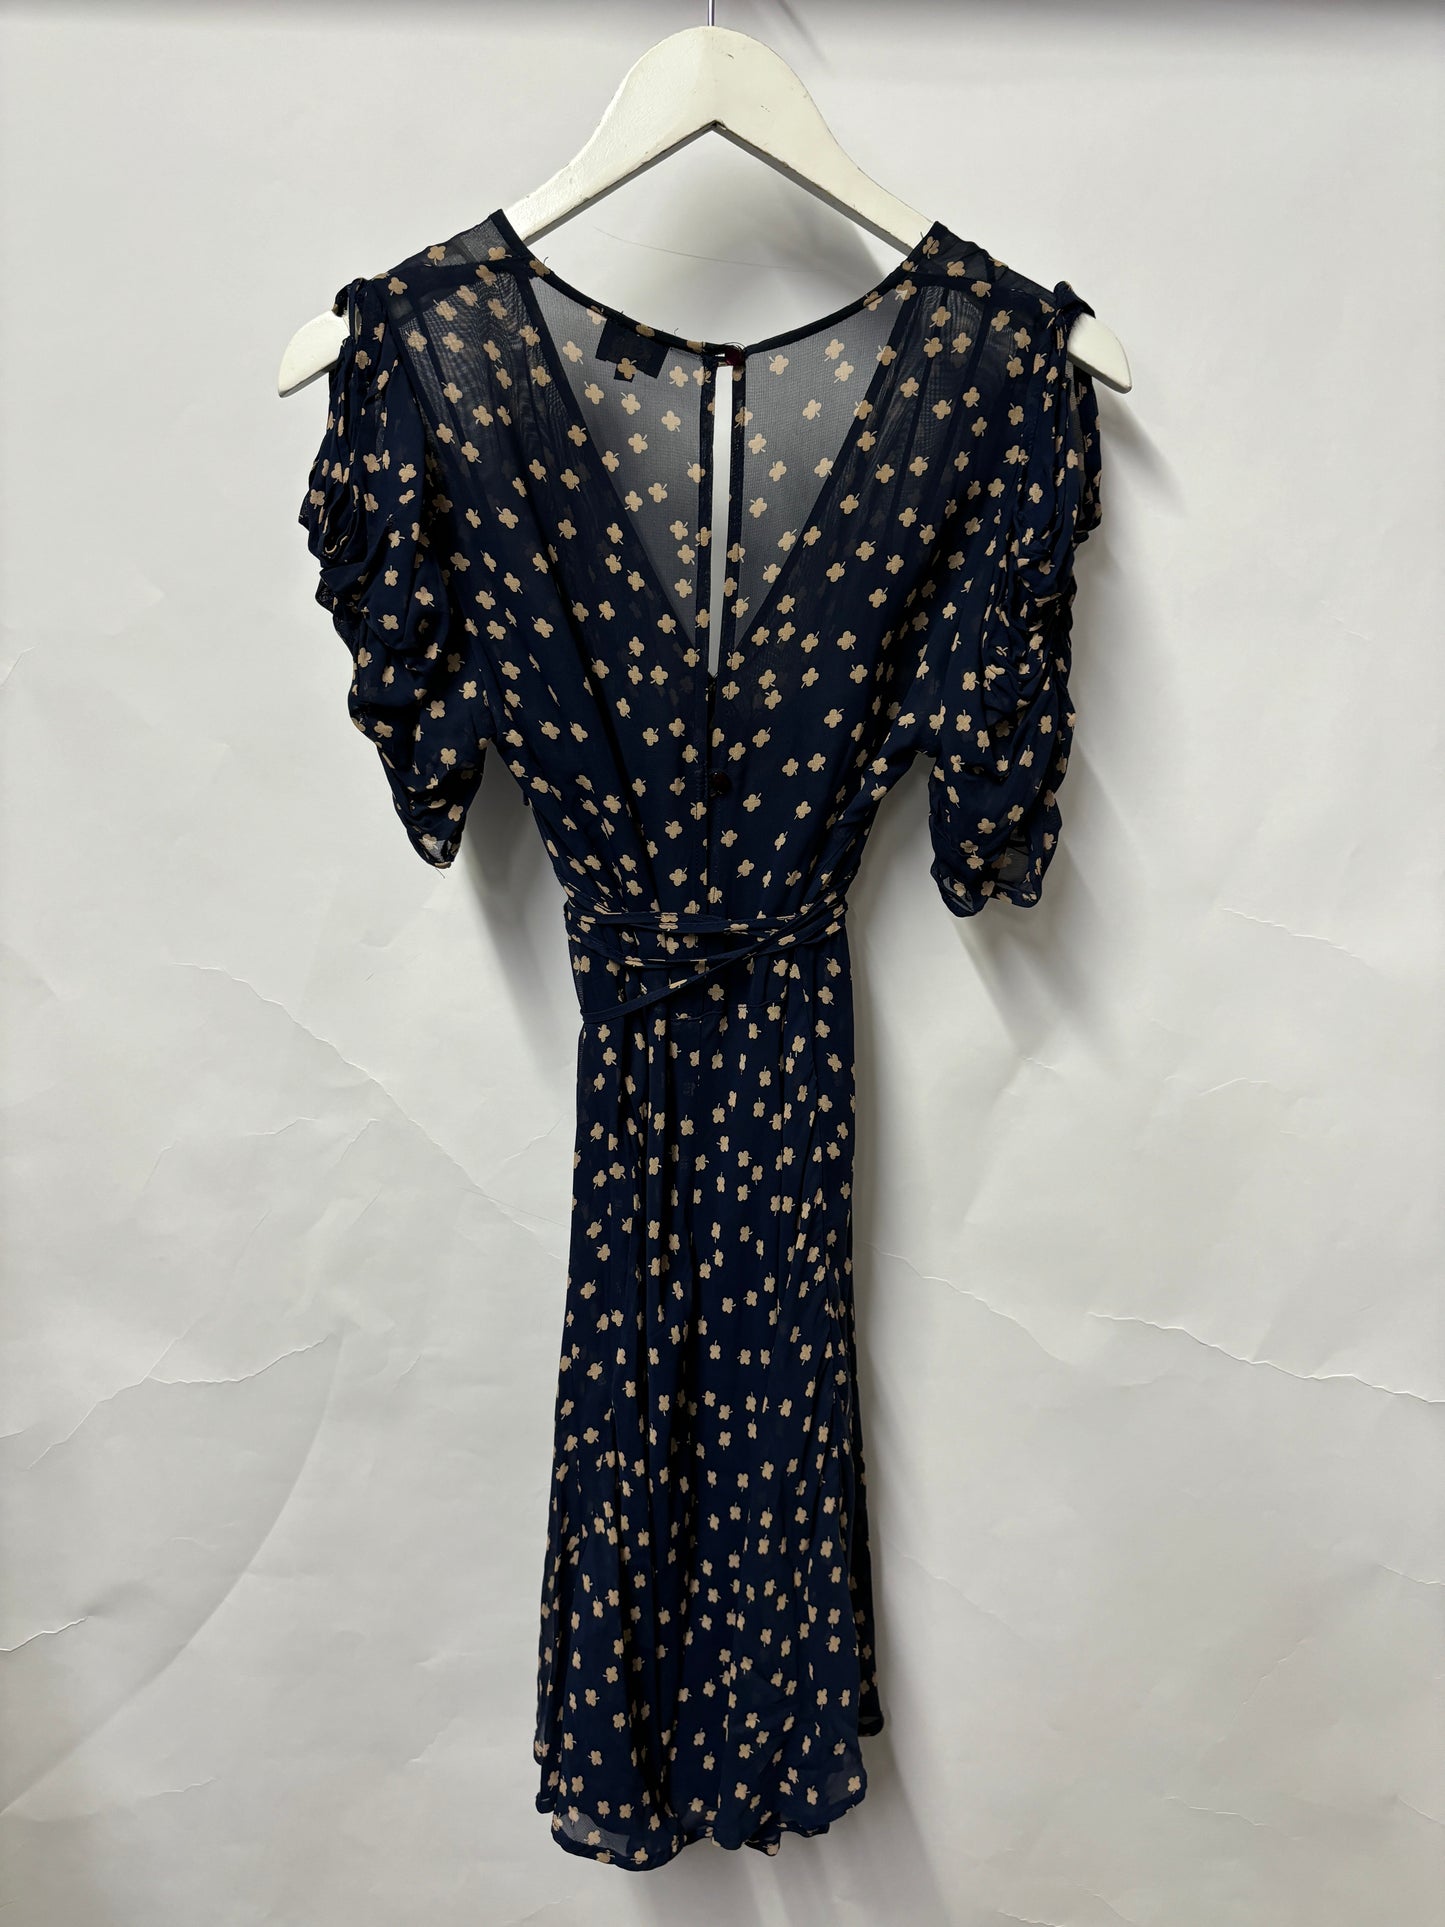 Topshop x Kate Moss Navy Clover Print Mini Dress 12